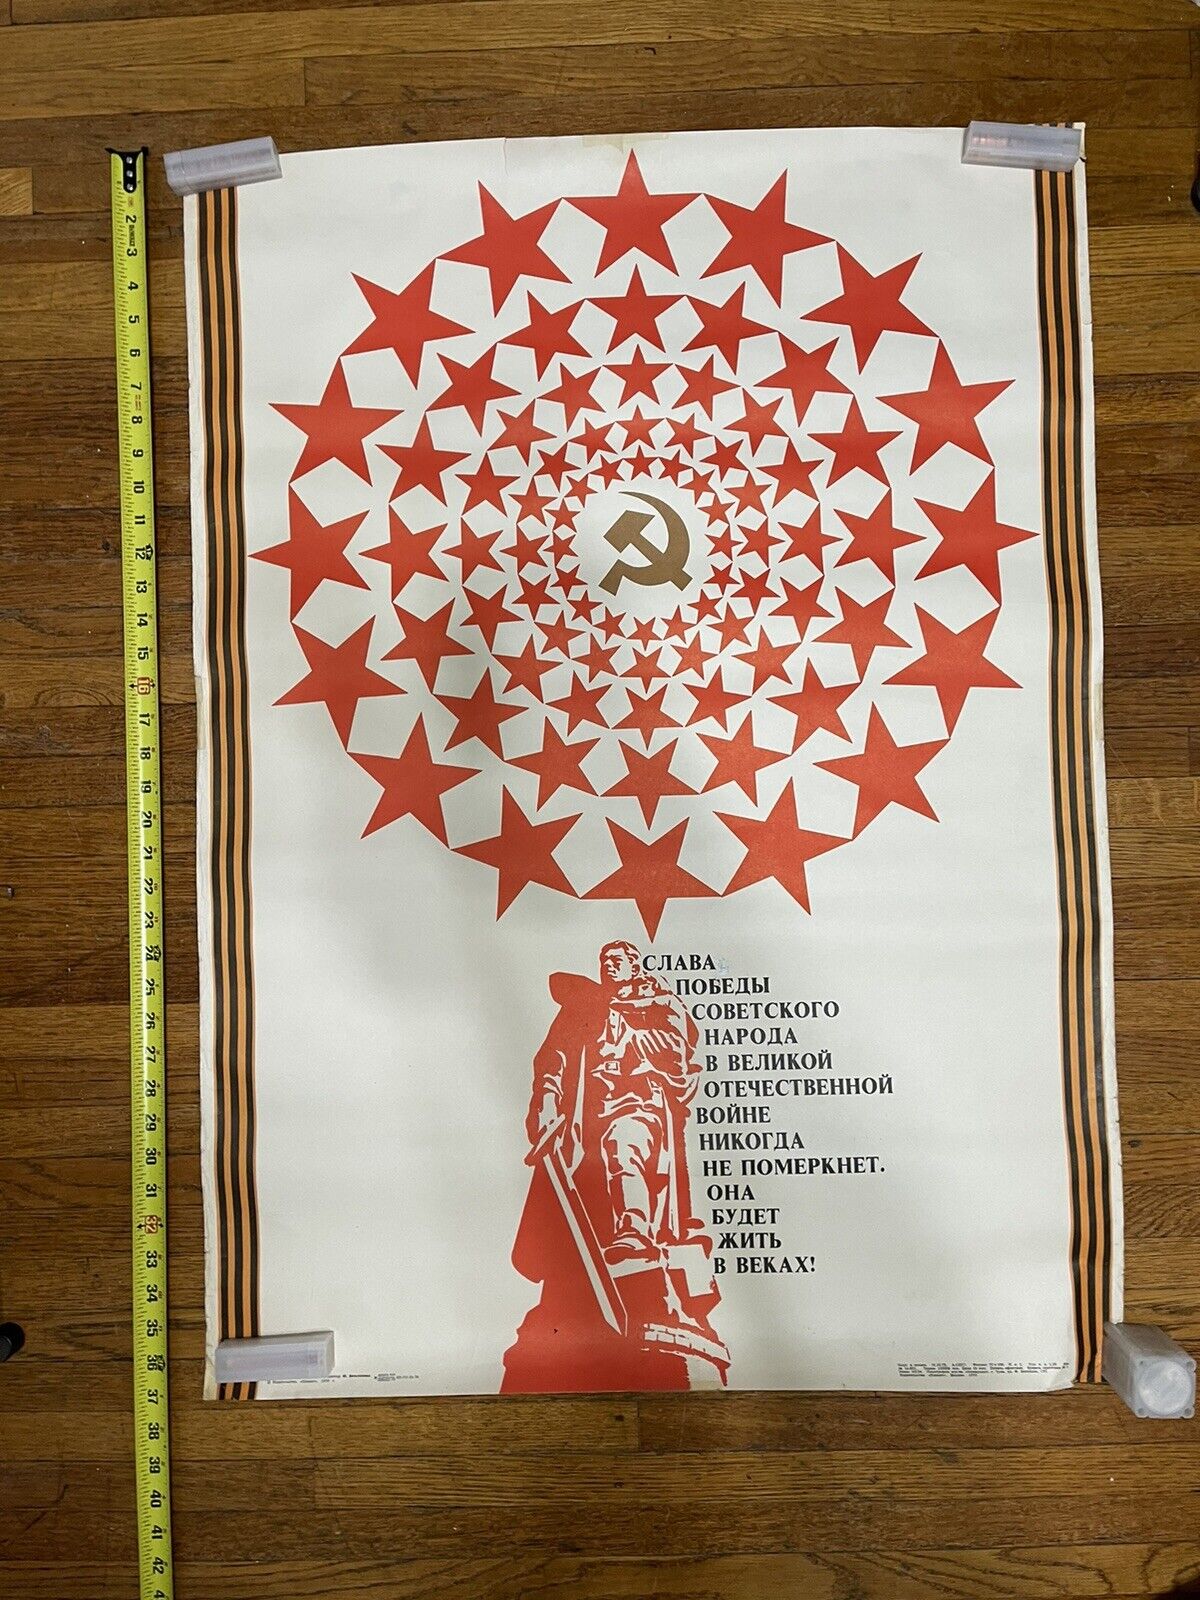 Poster Soviet  propaganda Communism - WWII VICTORY, 1979, USSR, Original Large